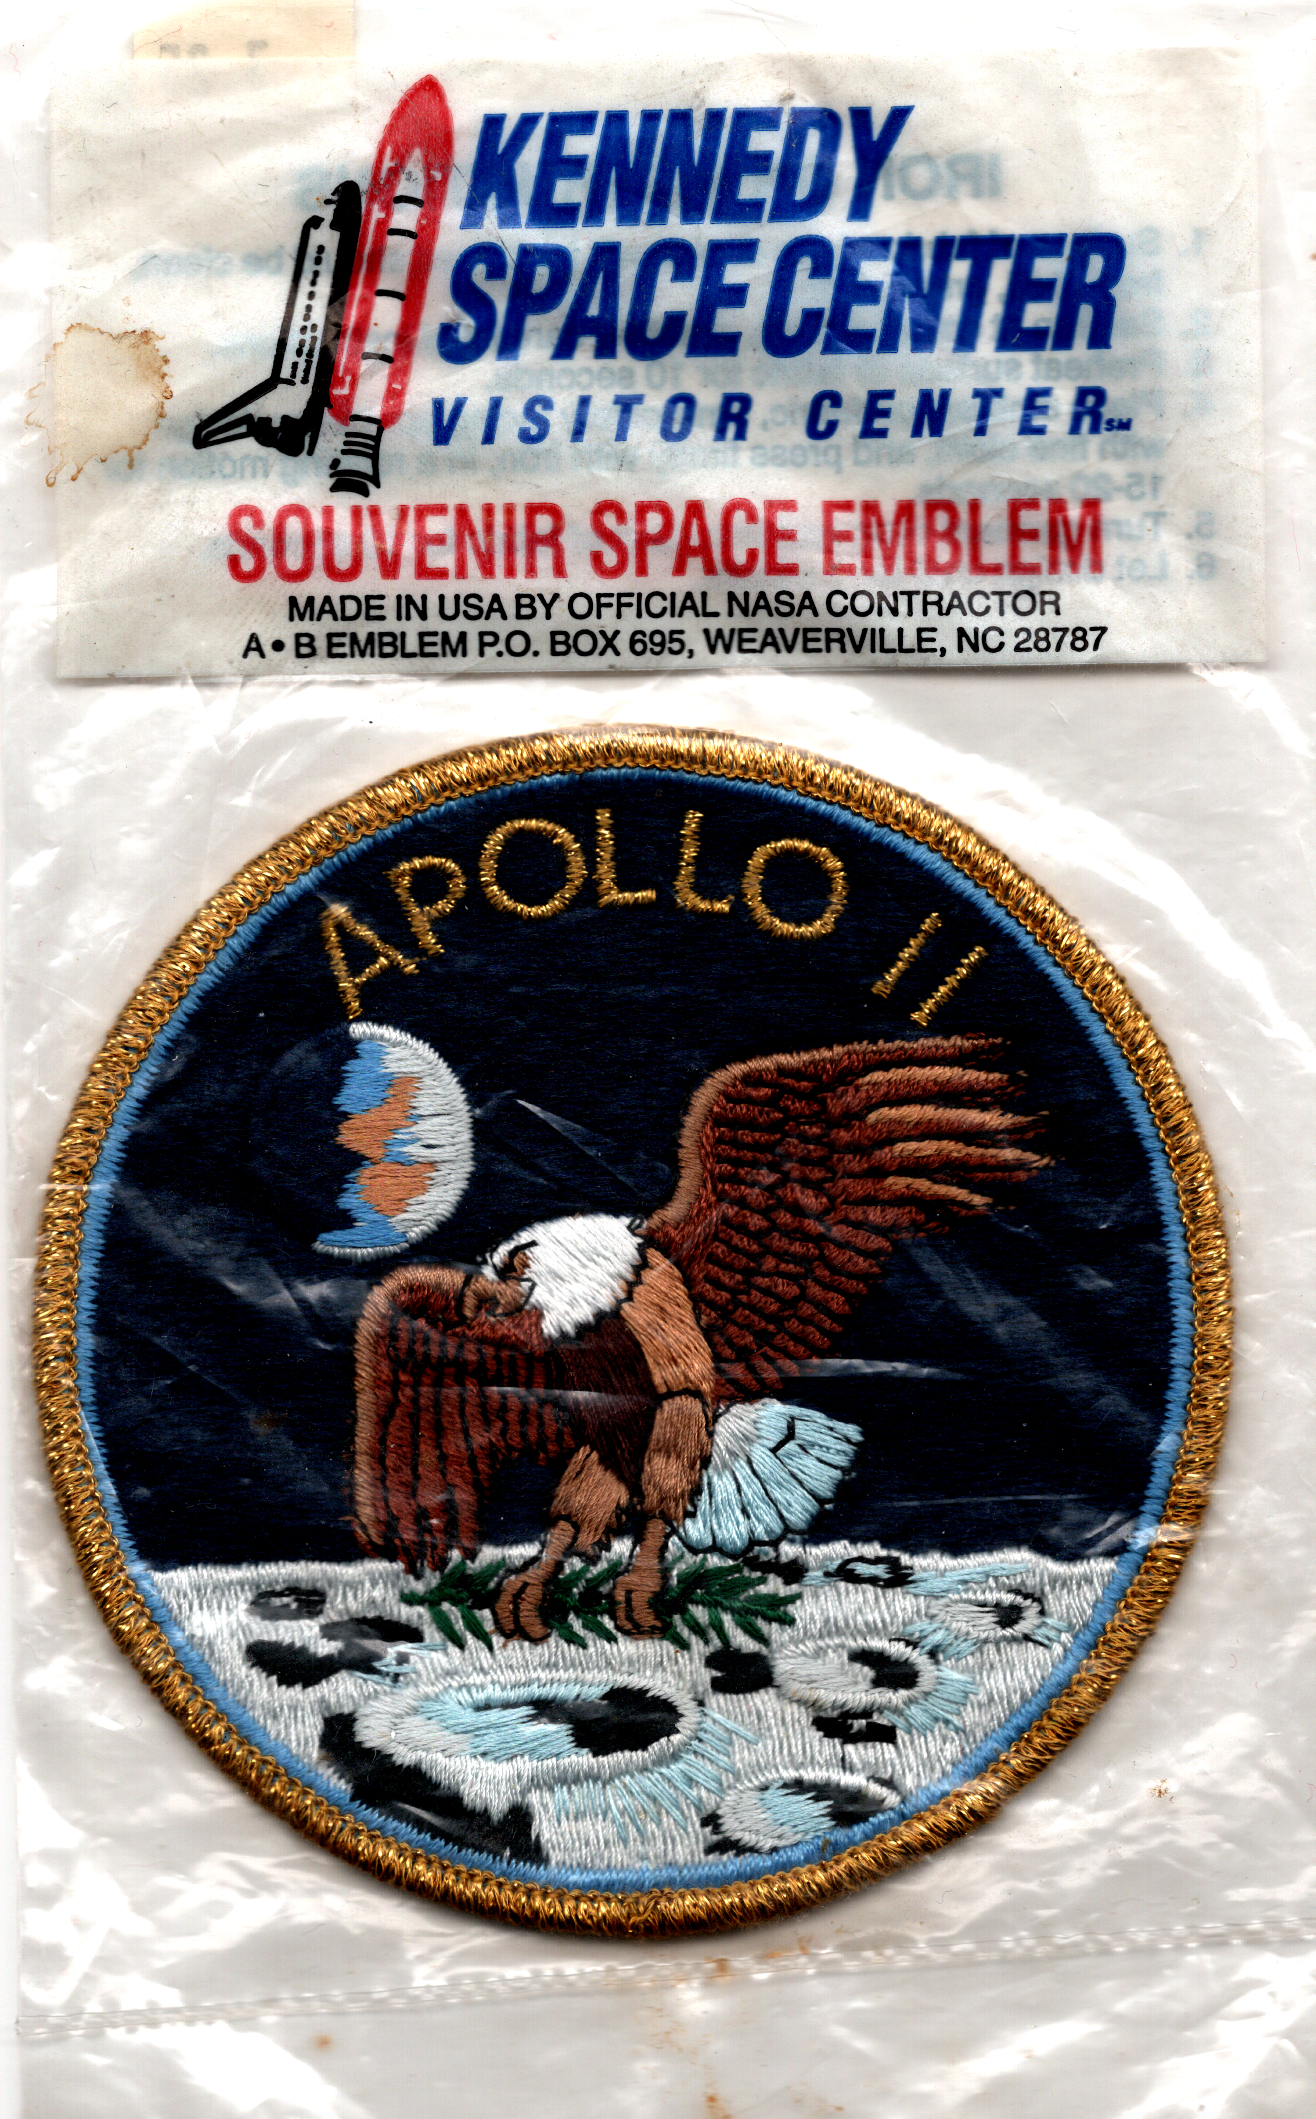 Patch Apollo 11